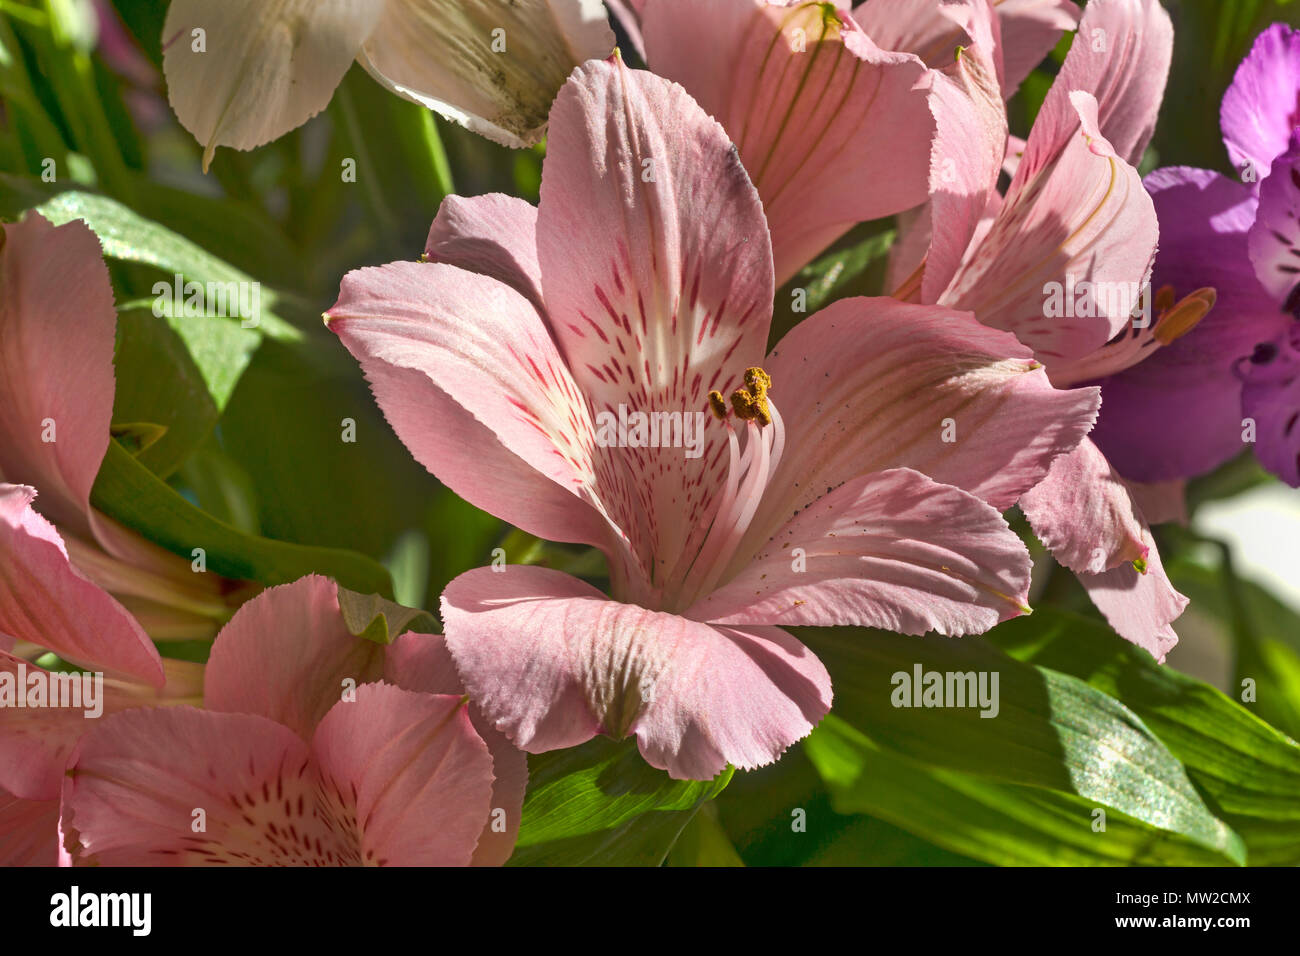 Leuchtend rosa Inkalilie, Blumenschau. Fokus gestapelt Makro. Stockfoto